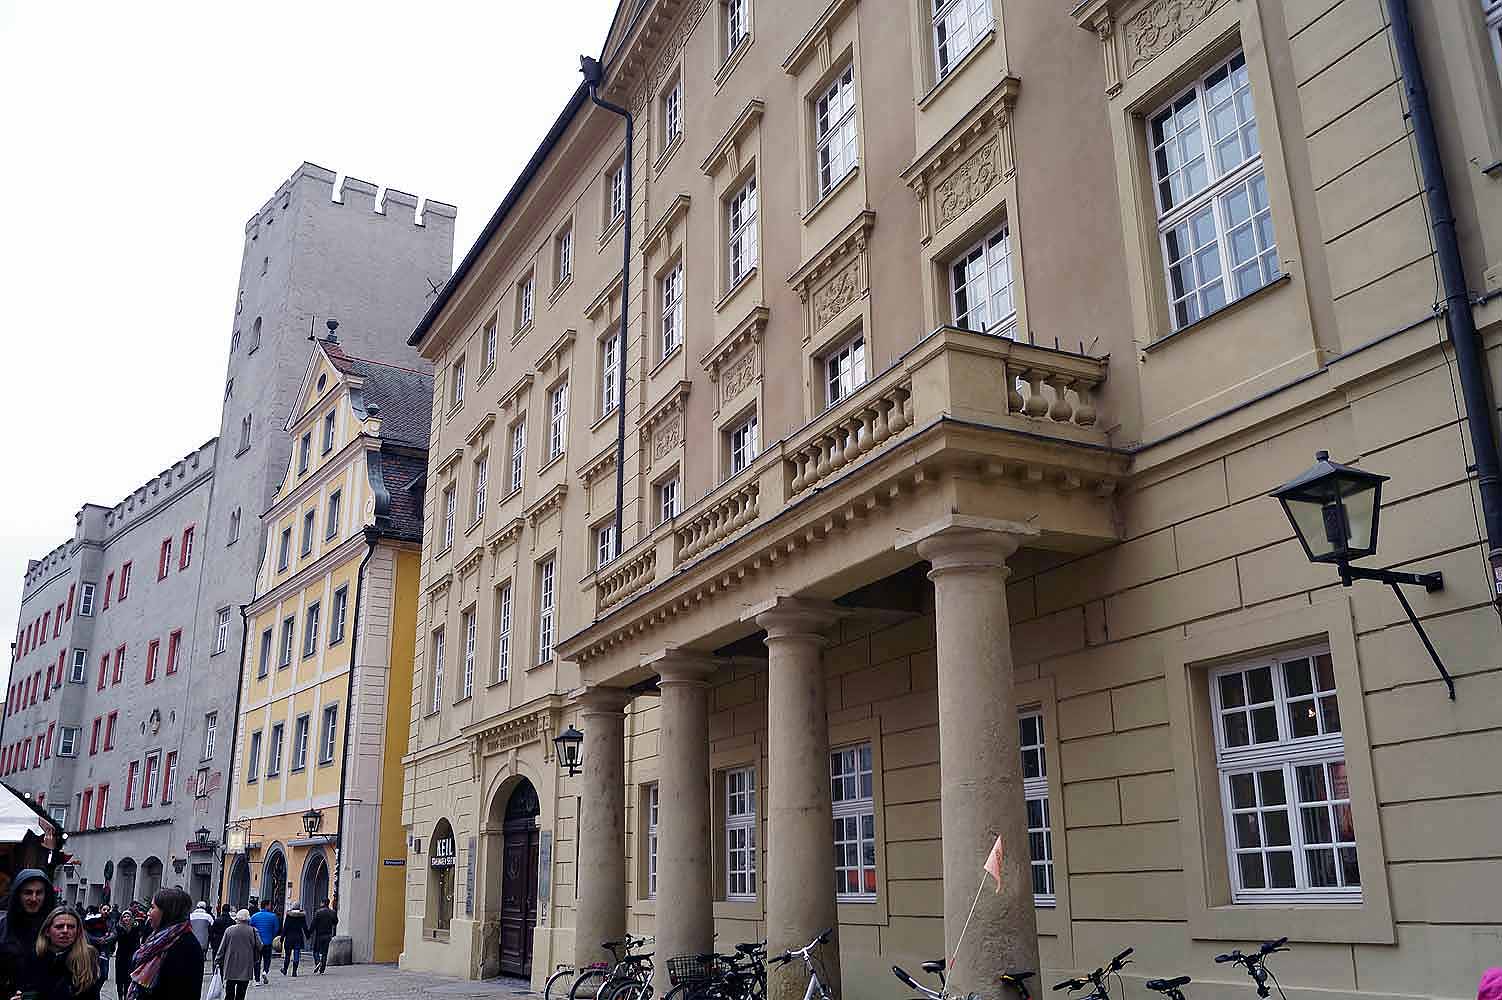 Patrizierhaus in Regensburg